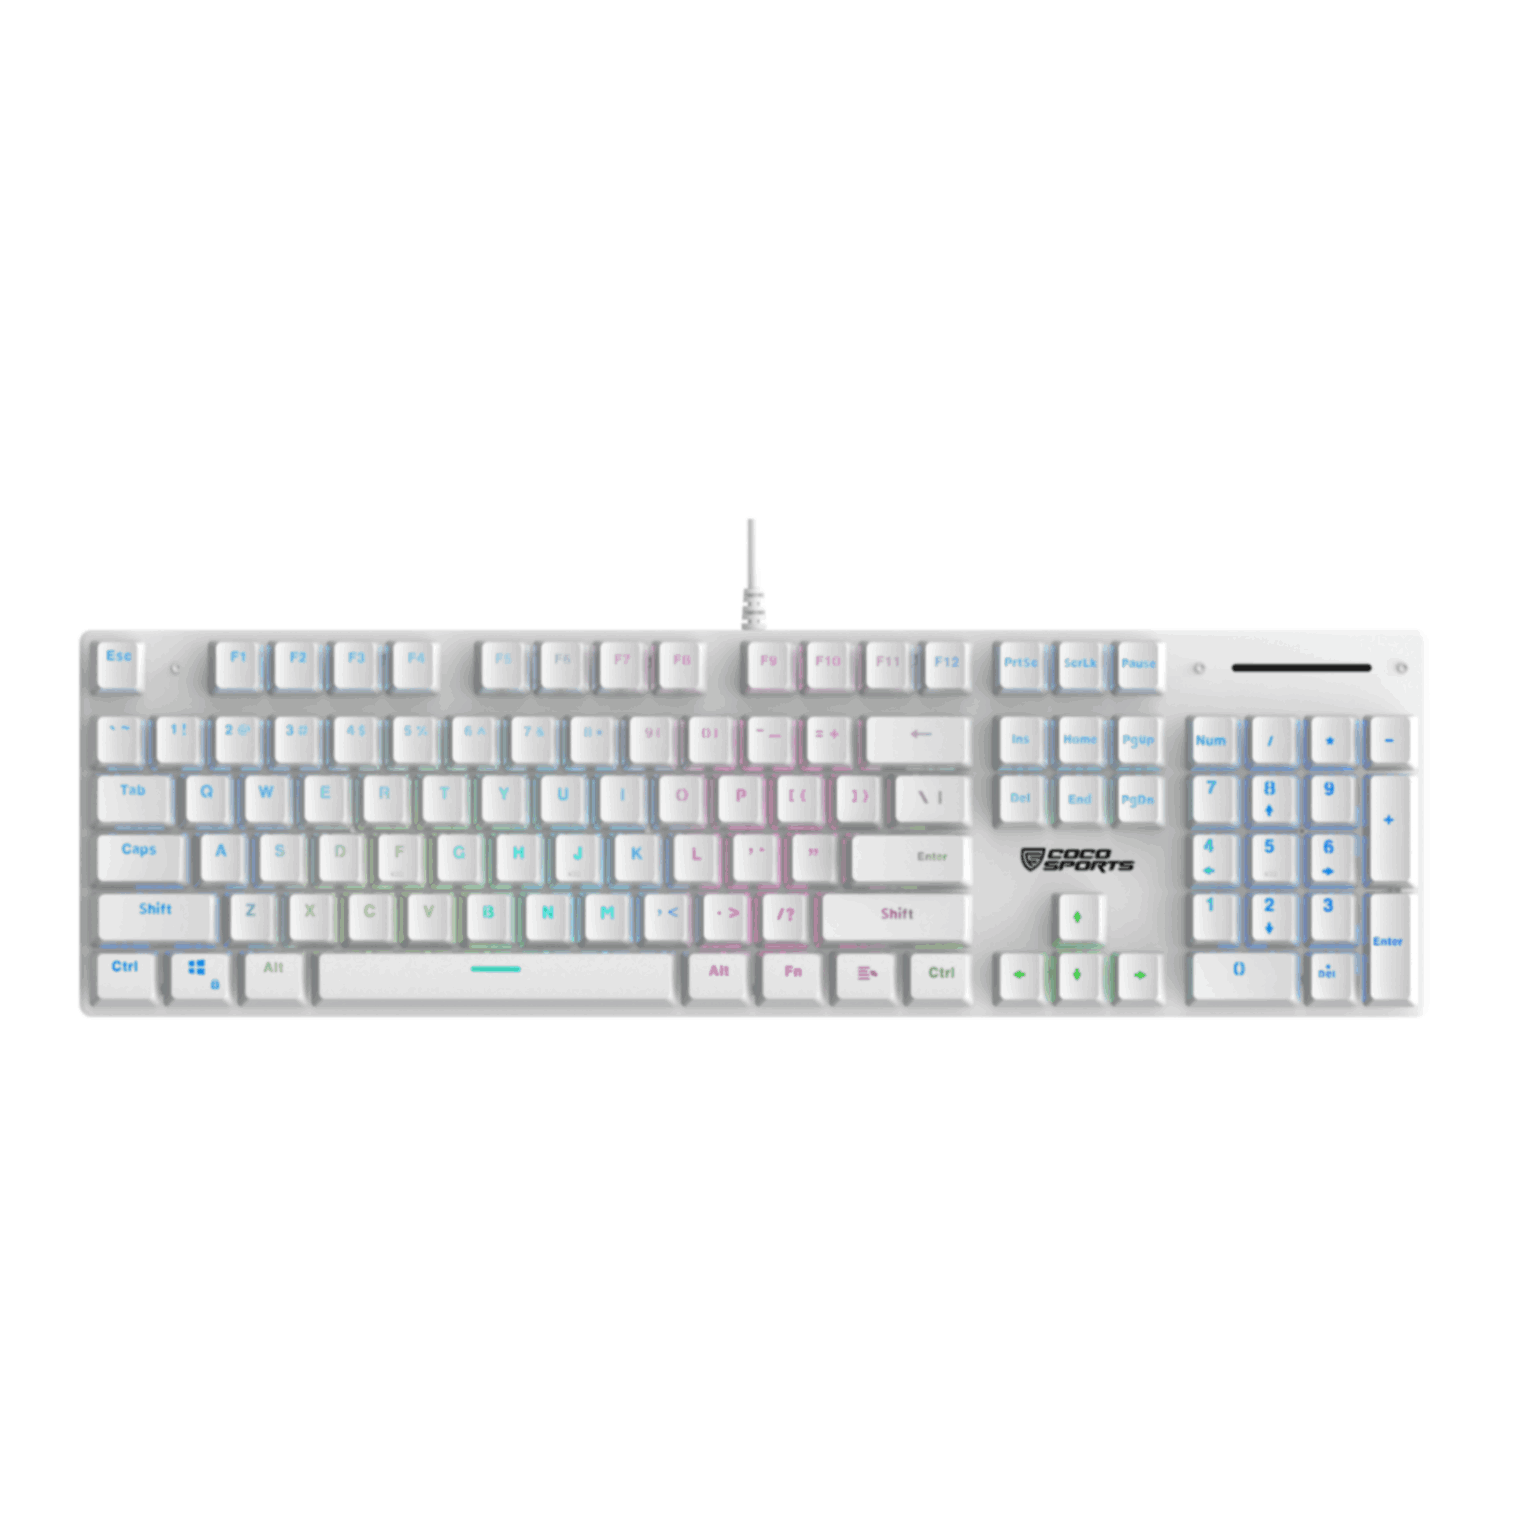 Storm Mechanical 104 Keys Wired Gaming Keyboard, Rainbow Backlighting, All Anti-Ghosting Keys